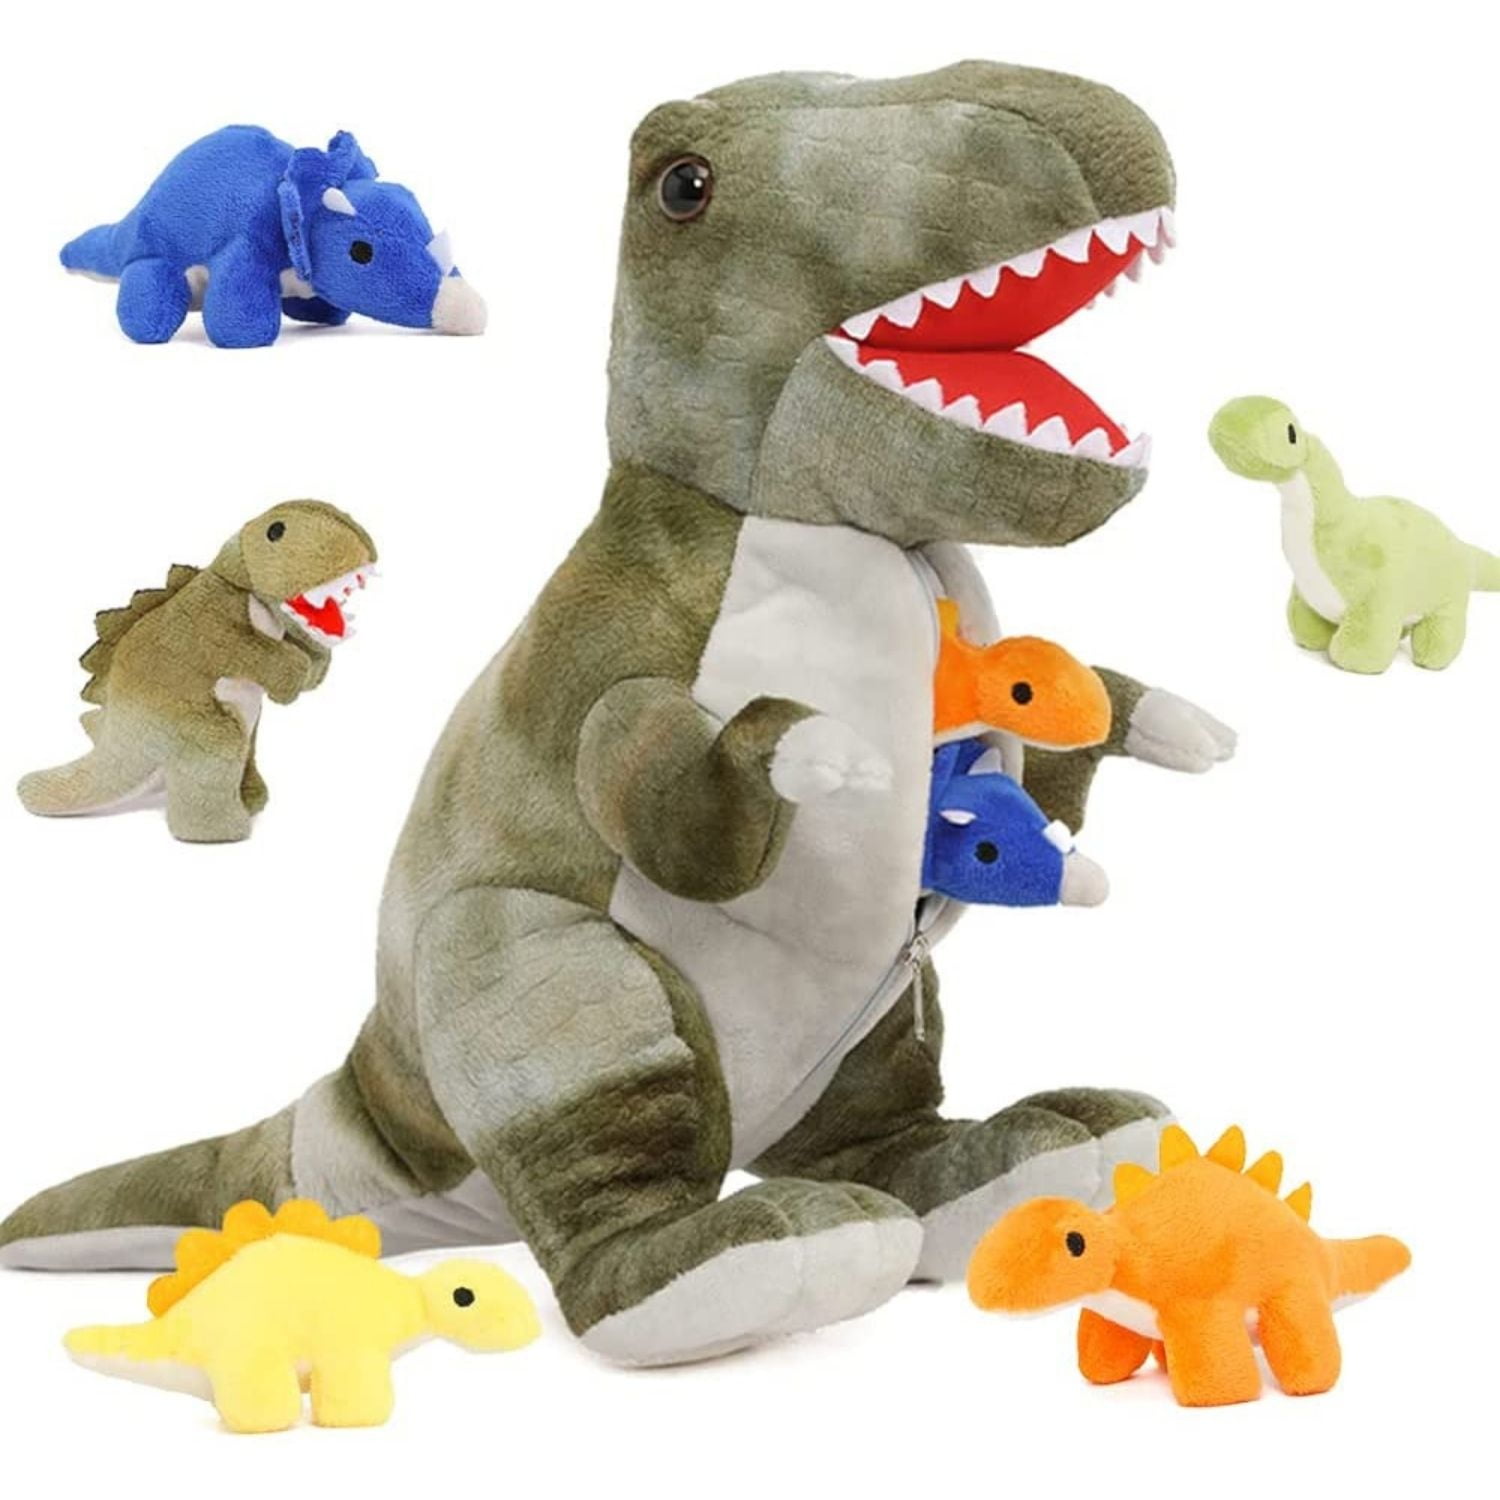 Big Dinosaur Plush Stuffed AnimalsAdorable 14-Inch Dinosaur Toys Set of 2 